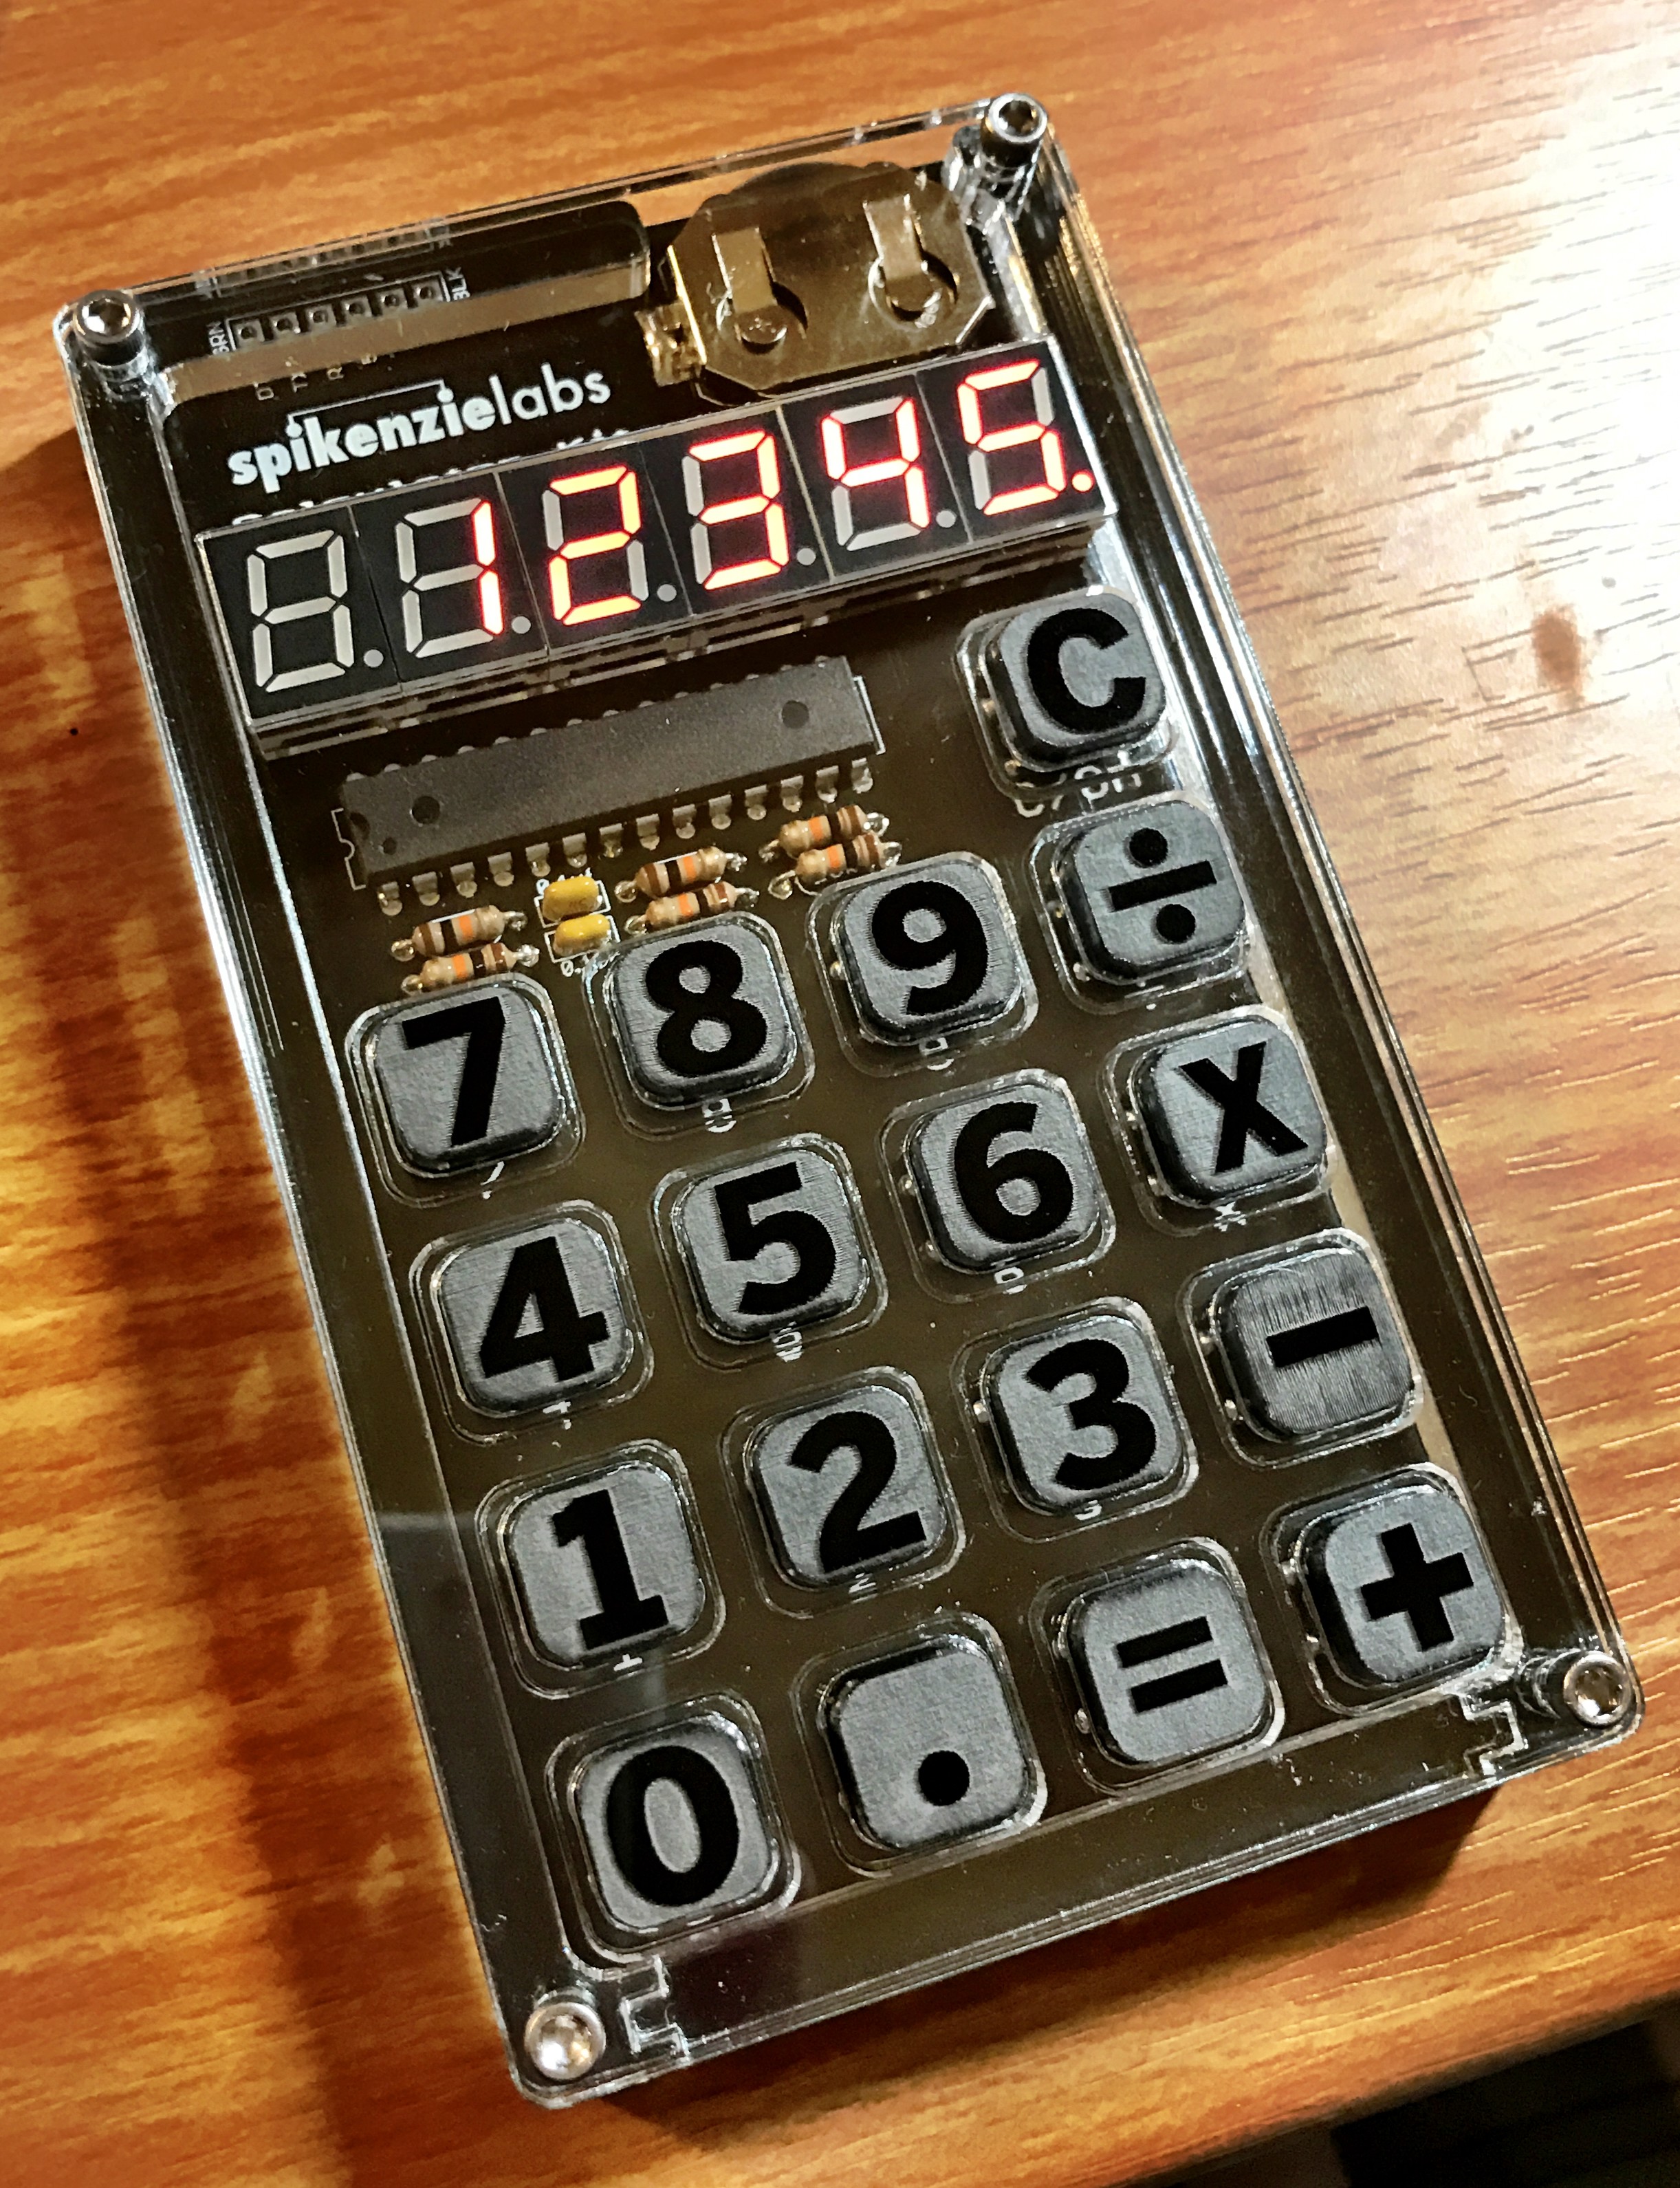 A completed SpikenzieLabs calculator